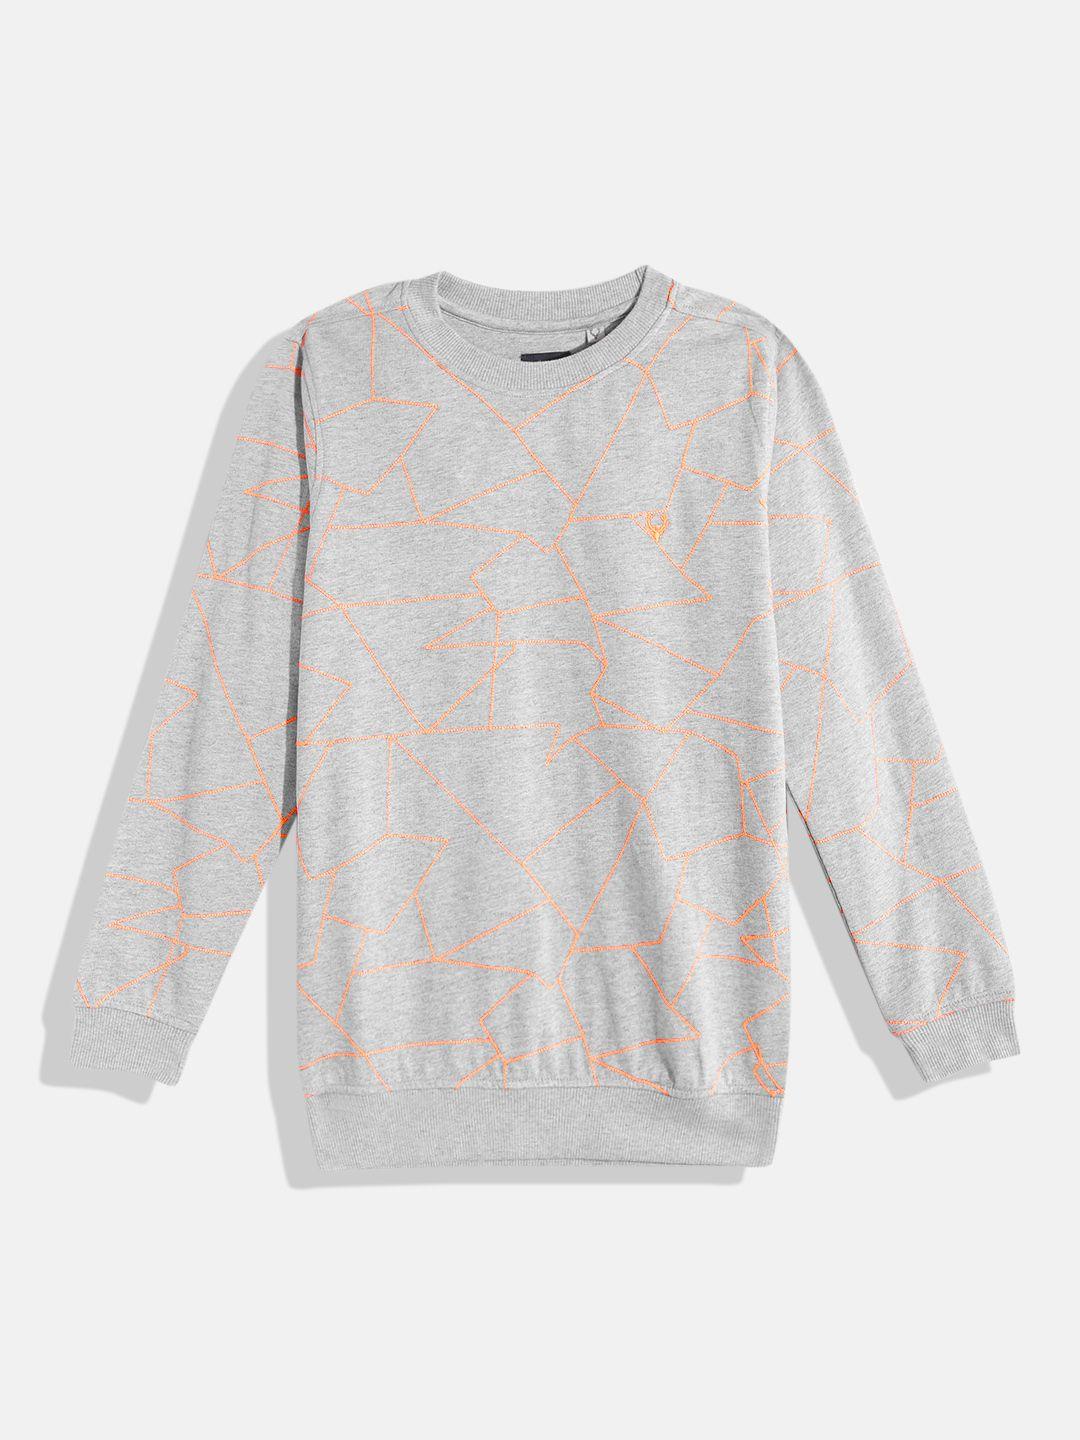 allen solly junior boys grey melange & orange embroidered pure cotton sweatshirt